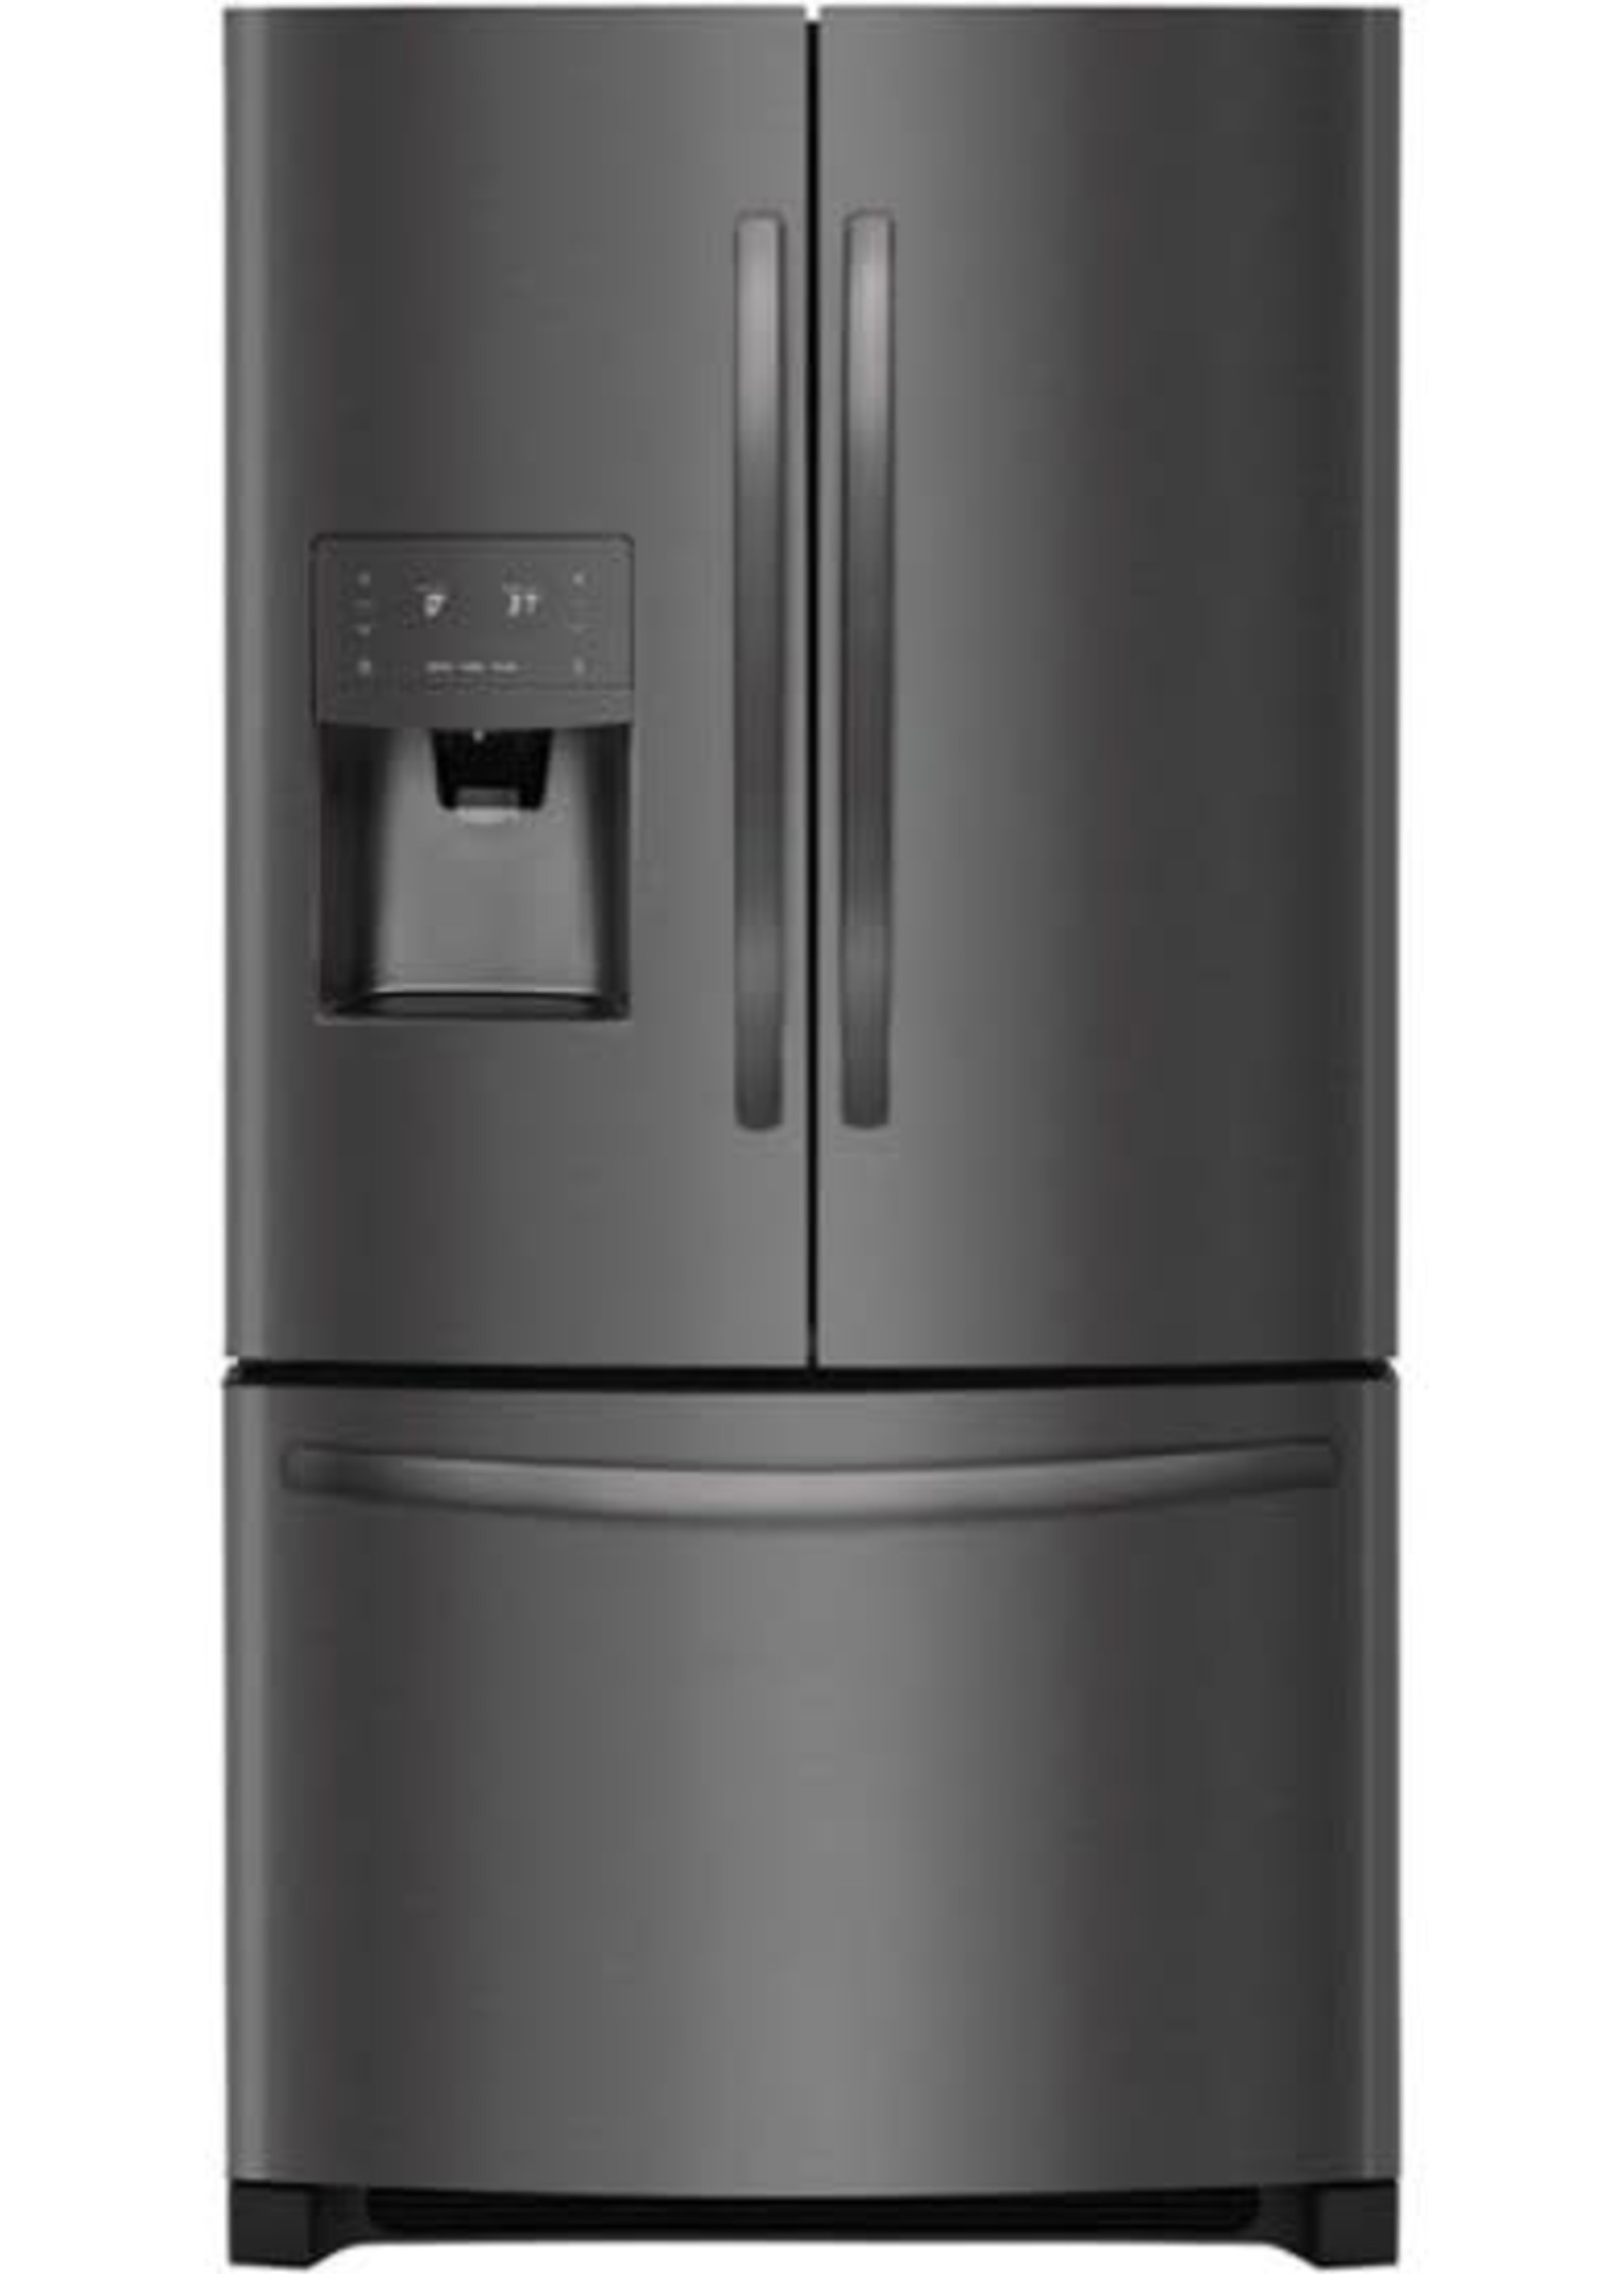 Frigidaire *Frigidaire FFHB2750TD  26.8 cu. ft. French Door Refrigerator in Black Stainless Steel